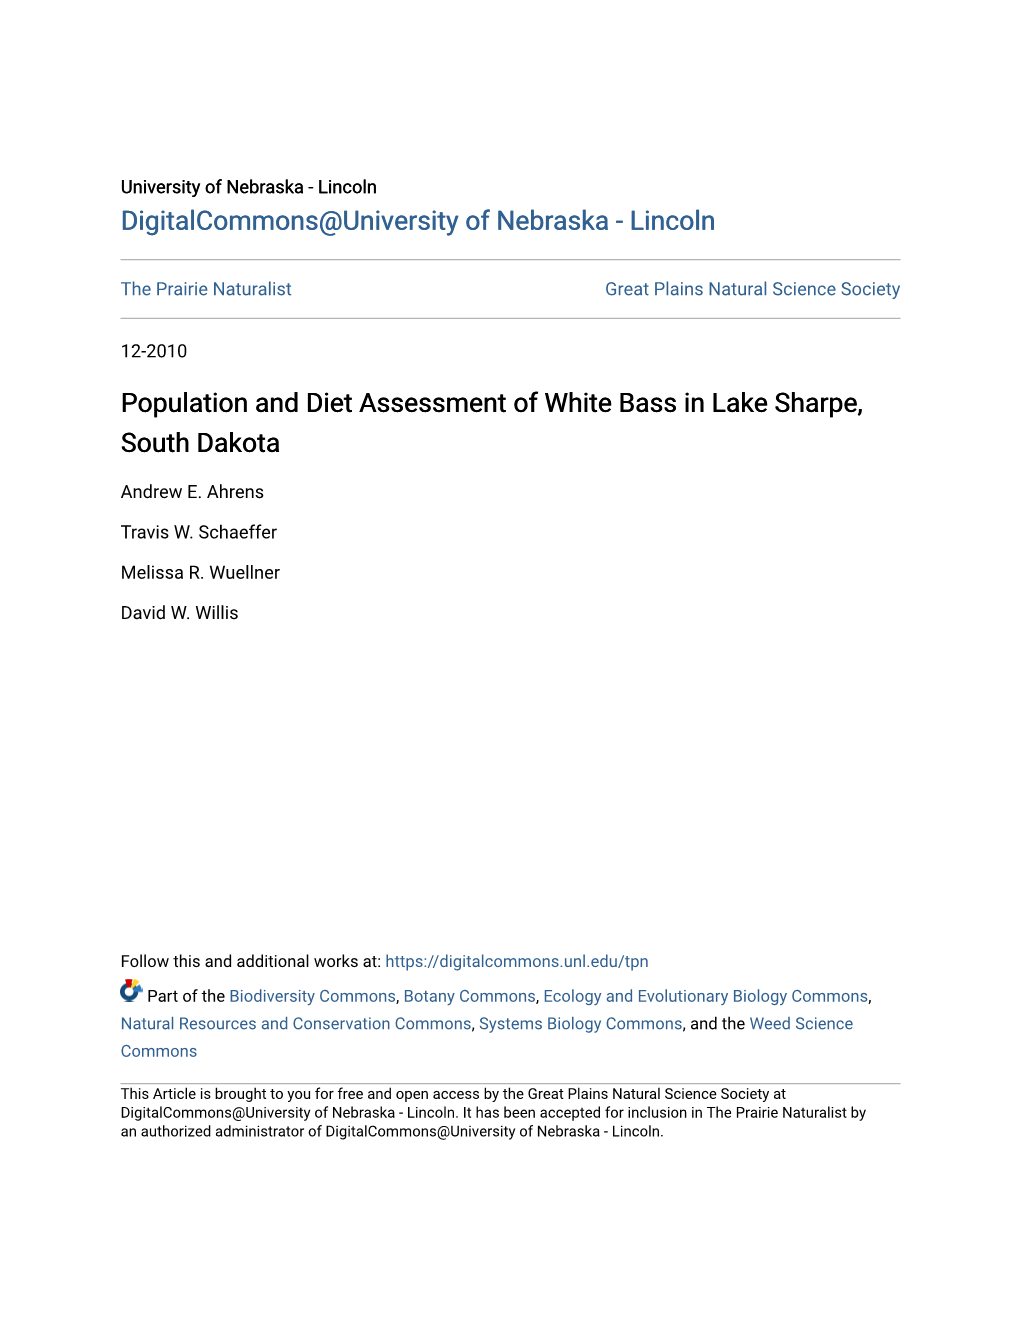 Population and Diet Assessment of White Bass in Lake Sharpe, South Dakota